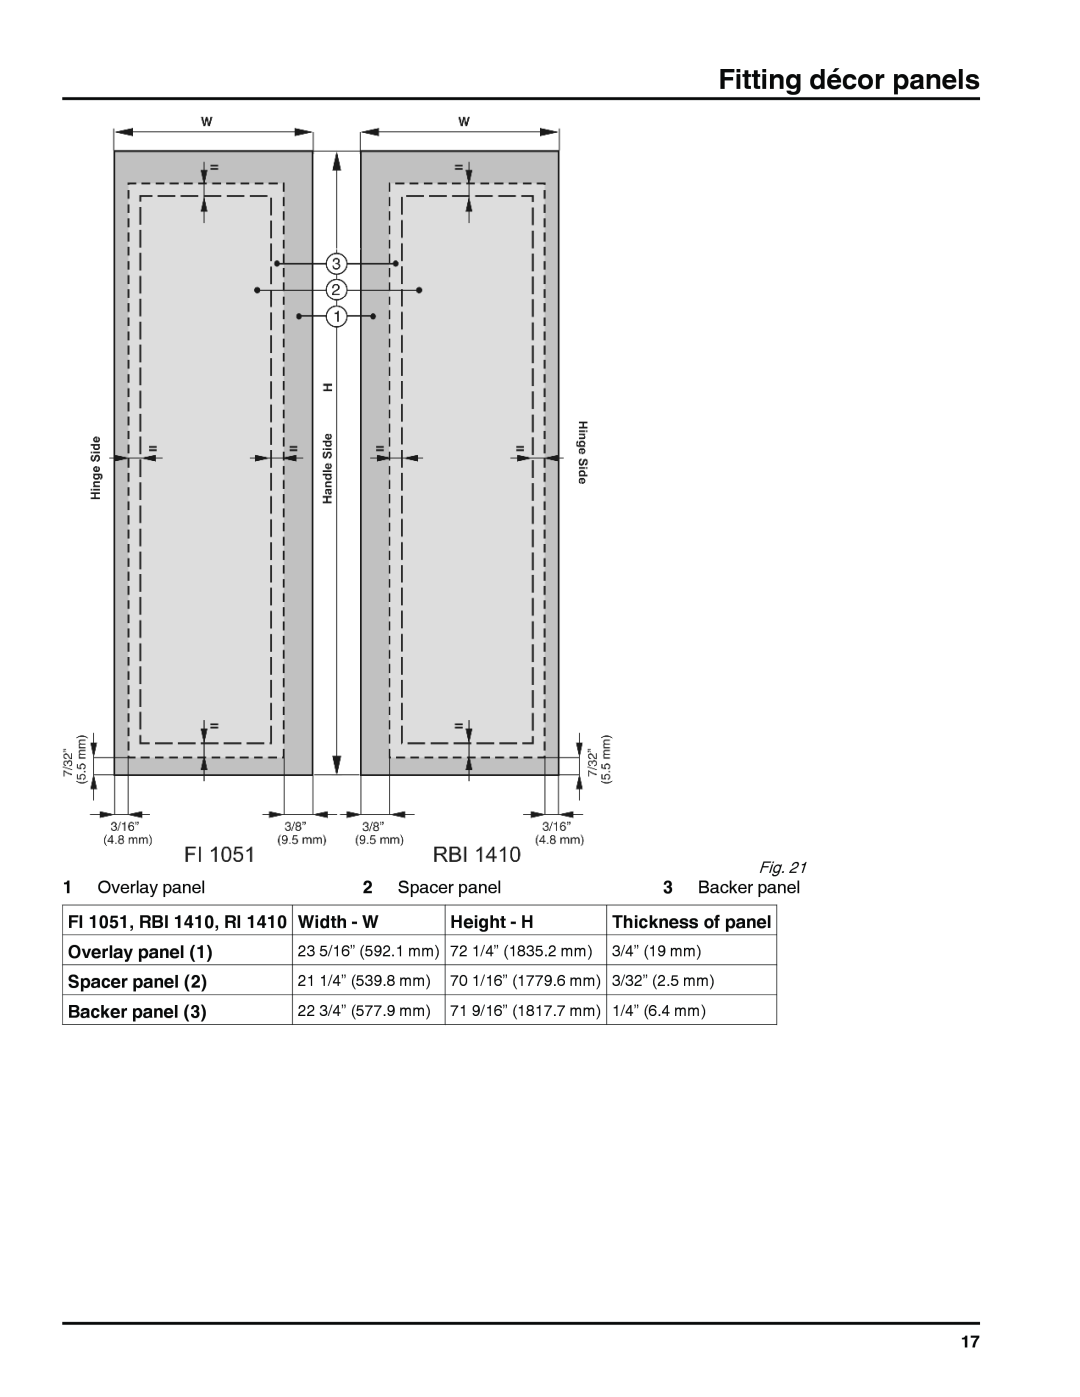 Liebherr RI 1410/ RBI 1410/ FI 1051 FI 1051, RBI 1410, RI, Overlay panel, Spacer panel, Backer panel, Fitting décor panels 